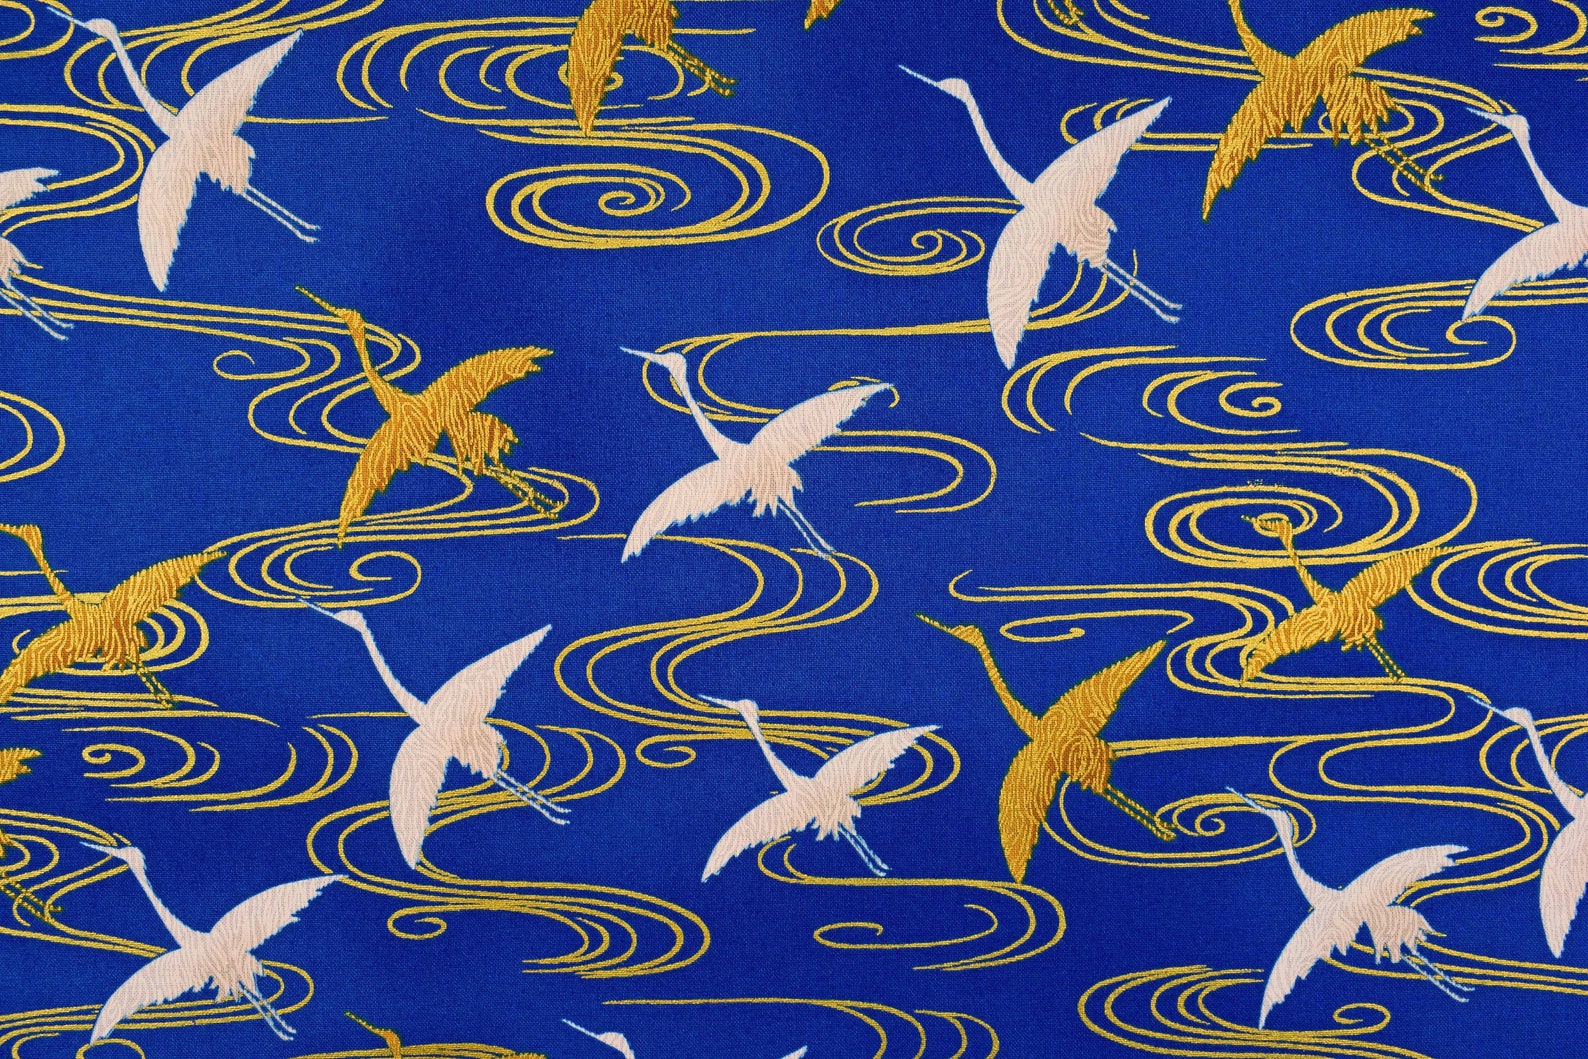 Japanese crane fabric oriental cotton quilting fabric | Etsy